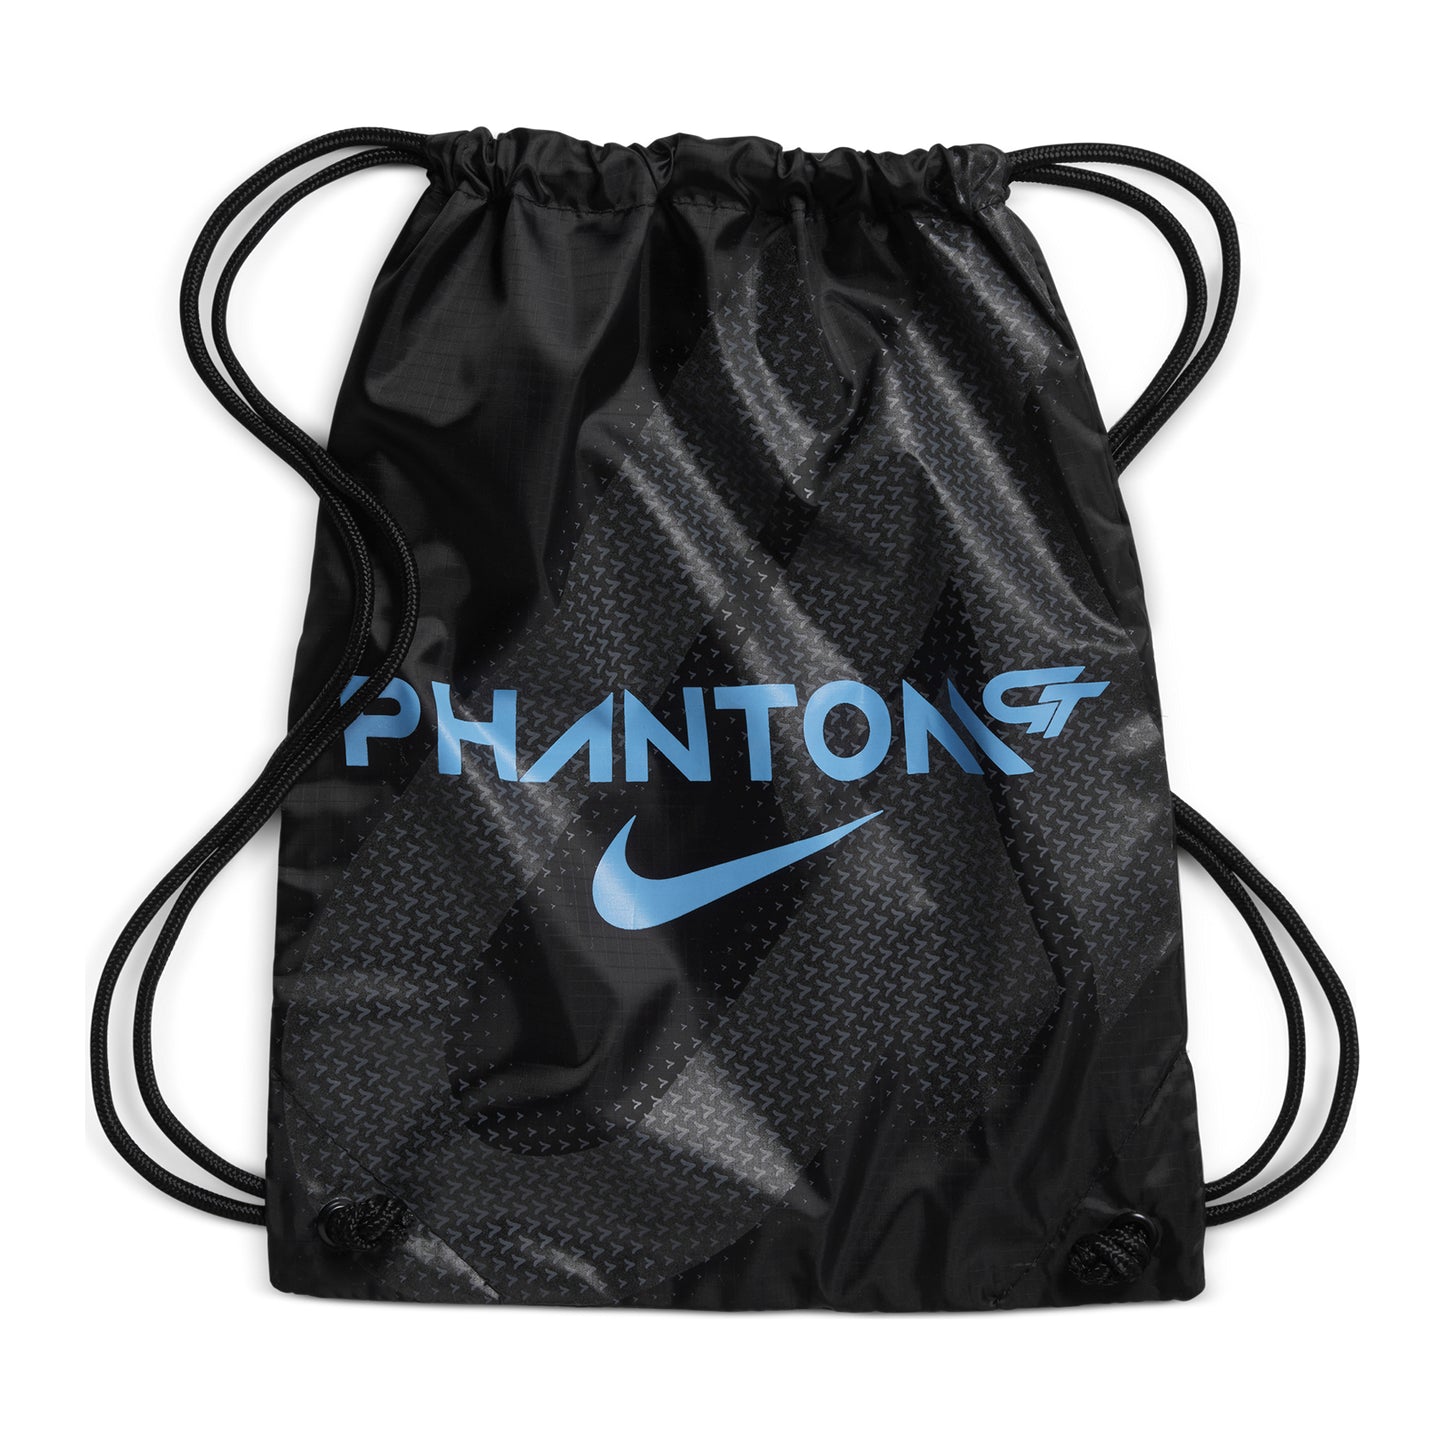 Unisex Phantom GT2 Elite FG Soccer Shoe - Black/Black/Iron Grey